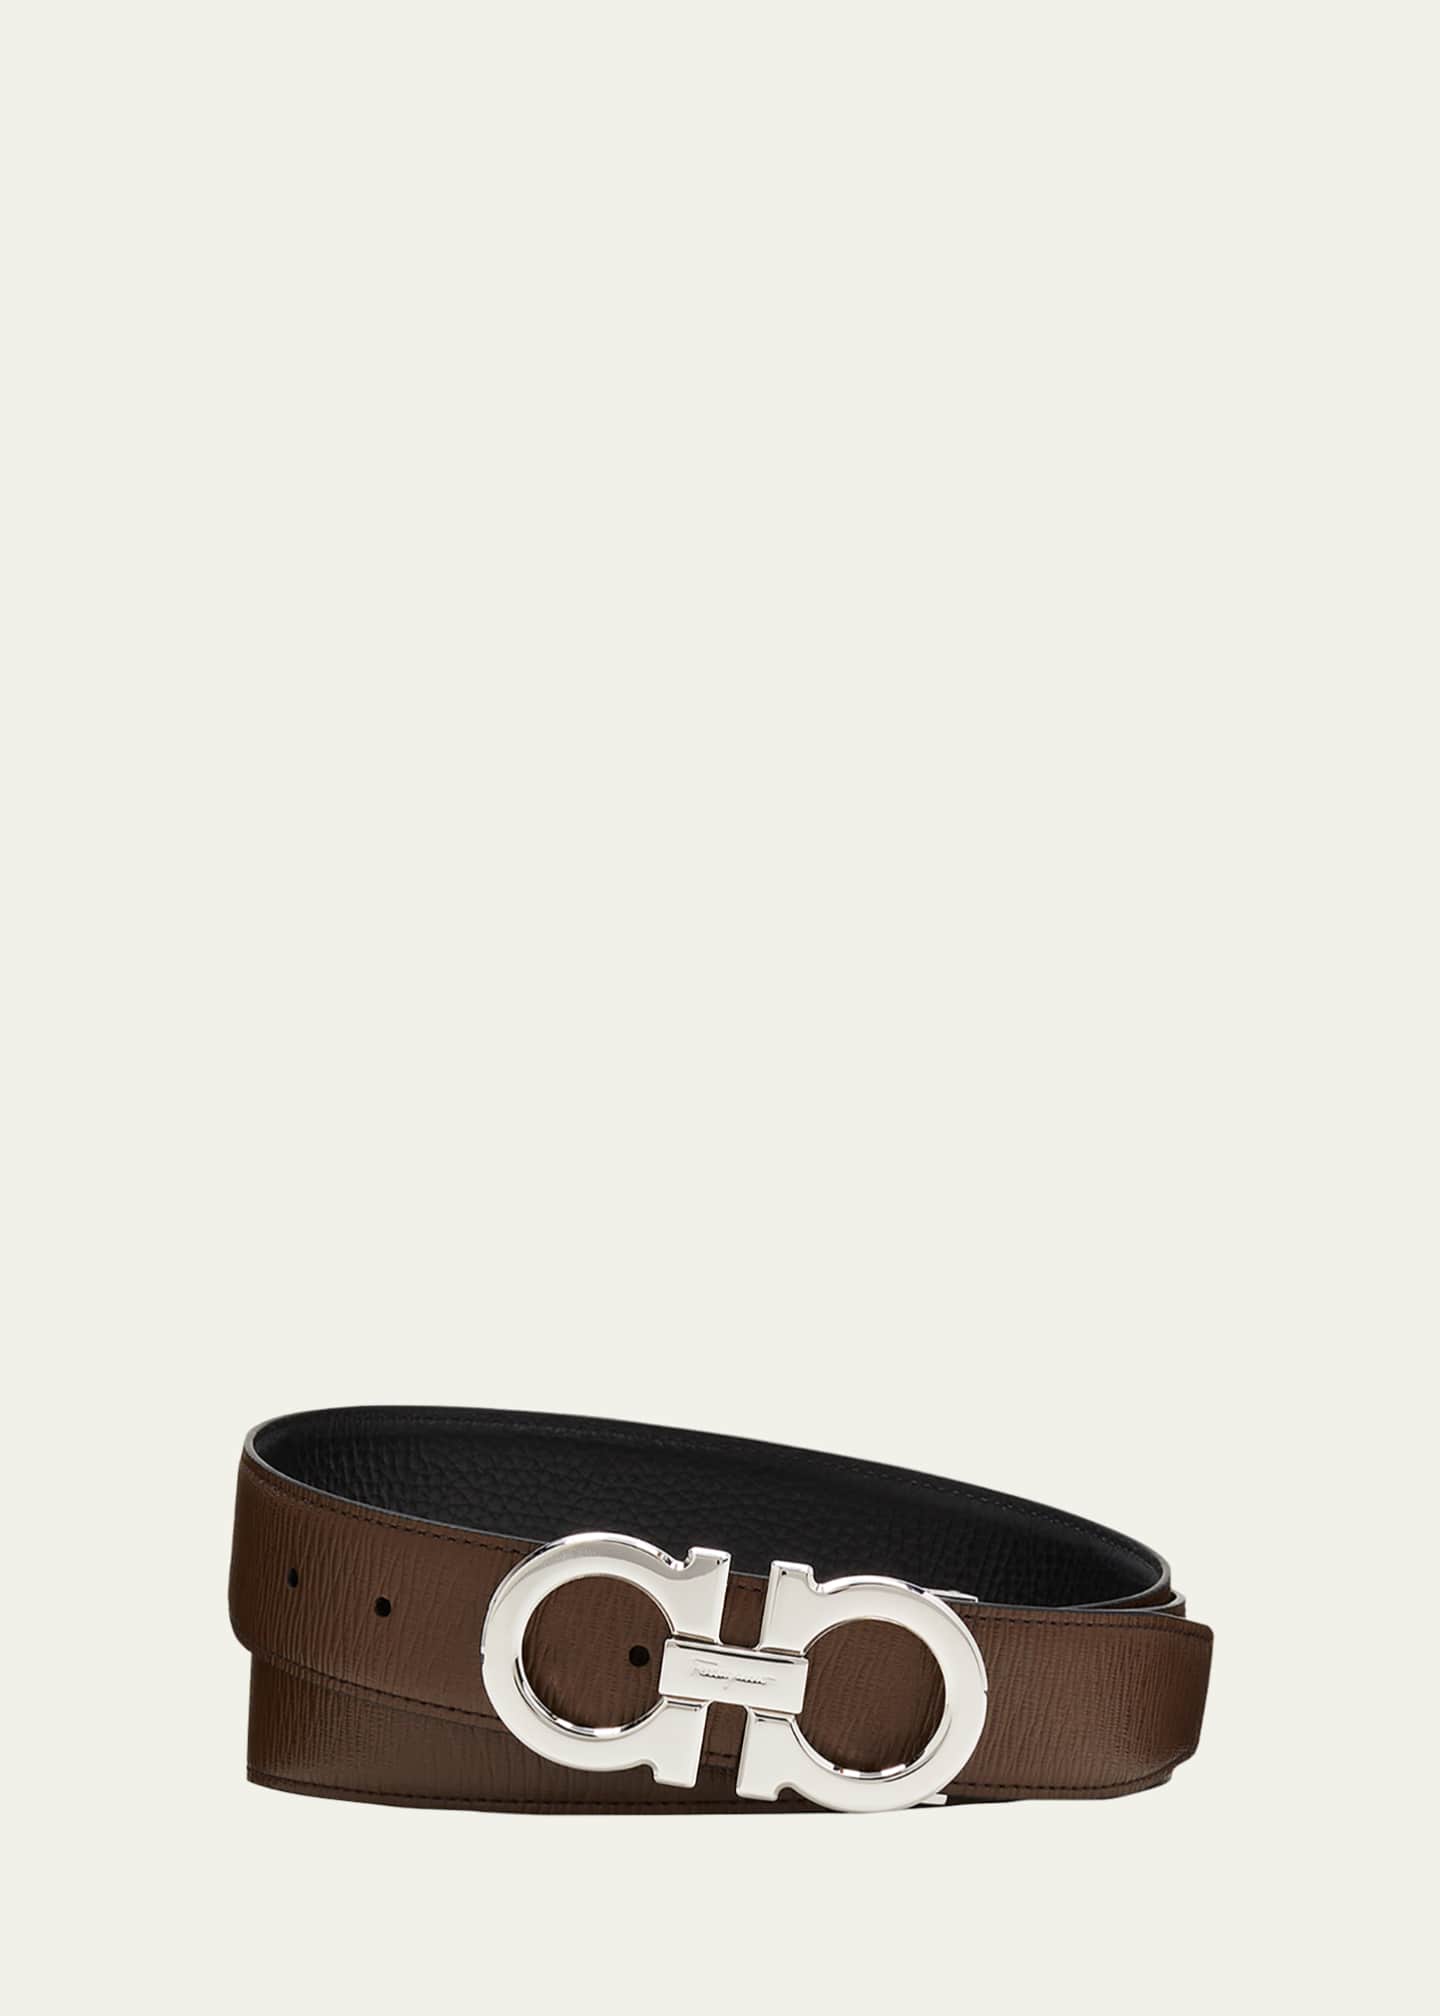 Gancini Ferragamo Reversible Leather Belt